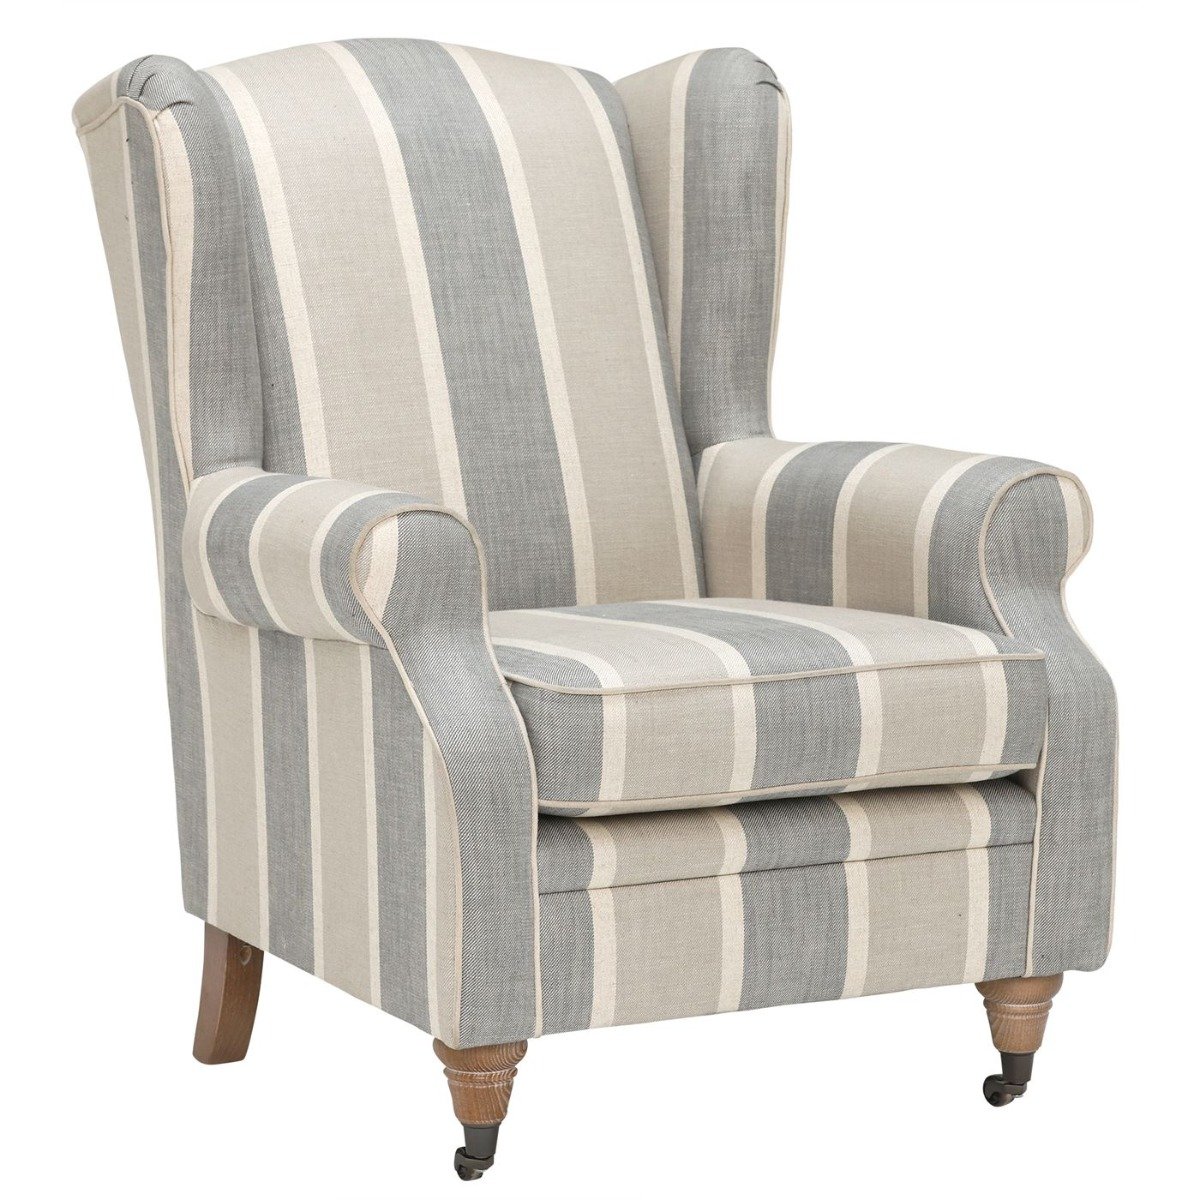 Calluna Accent Wing Chair Unbuttoned, Grey Fabric | Barker & Stonehouse